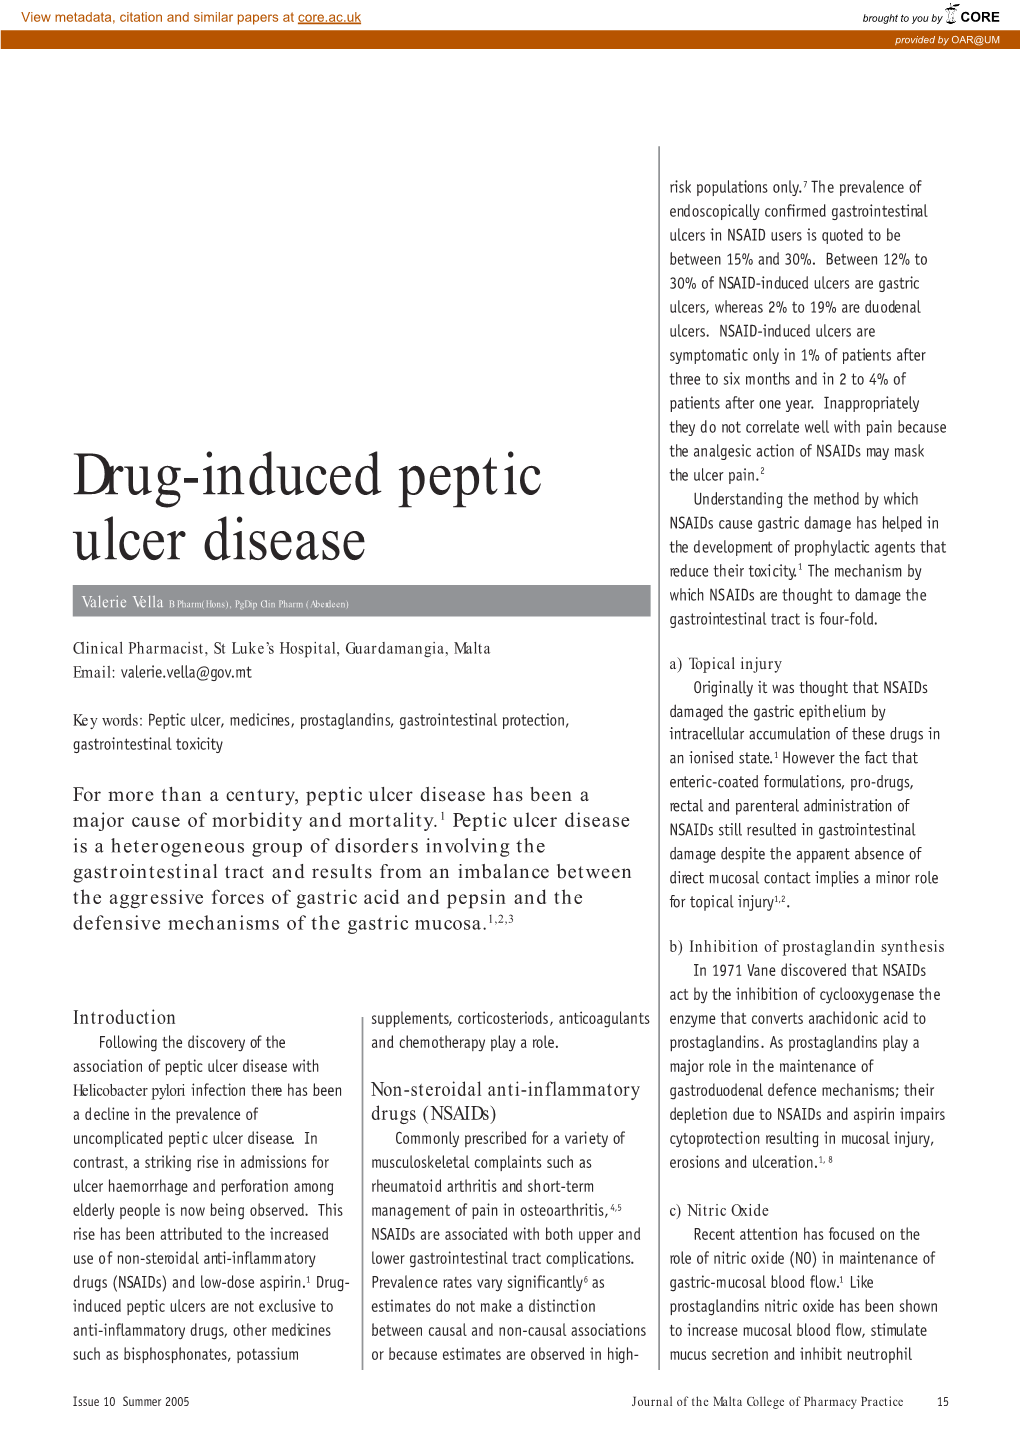 Drug-Induced Peptic Ulcer Disease